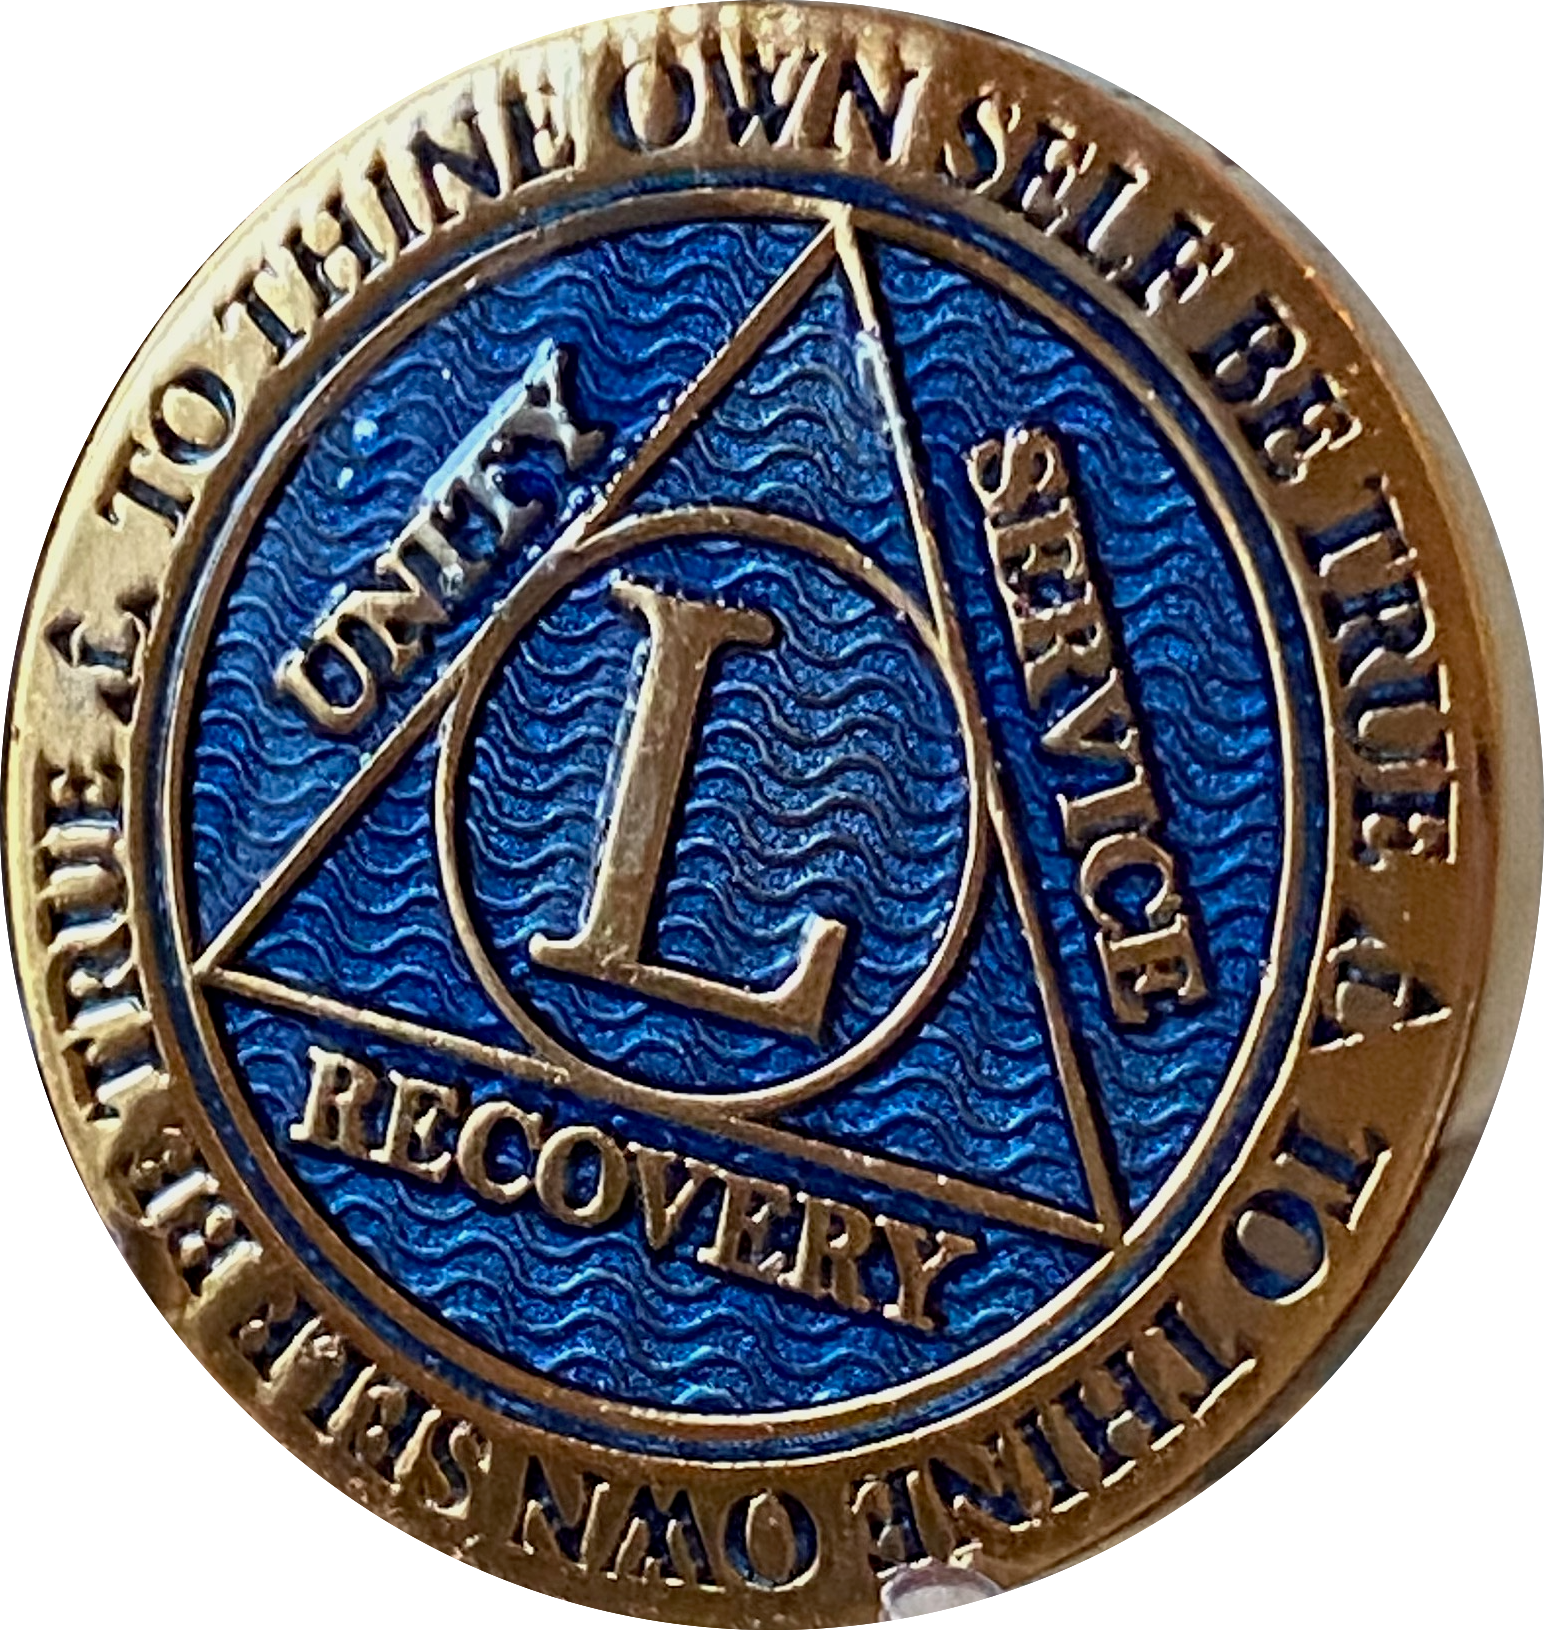 AA Medallion Holder Keychain For Recoverychip Reflex & Elegant Design  Medallions